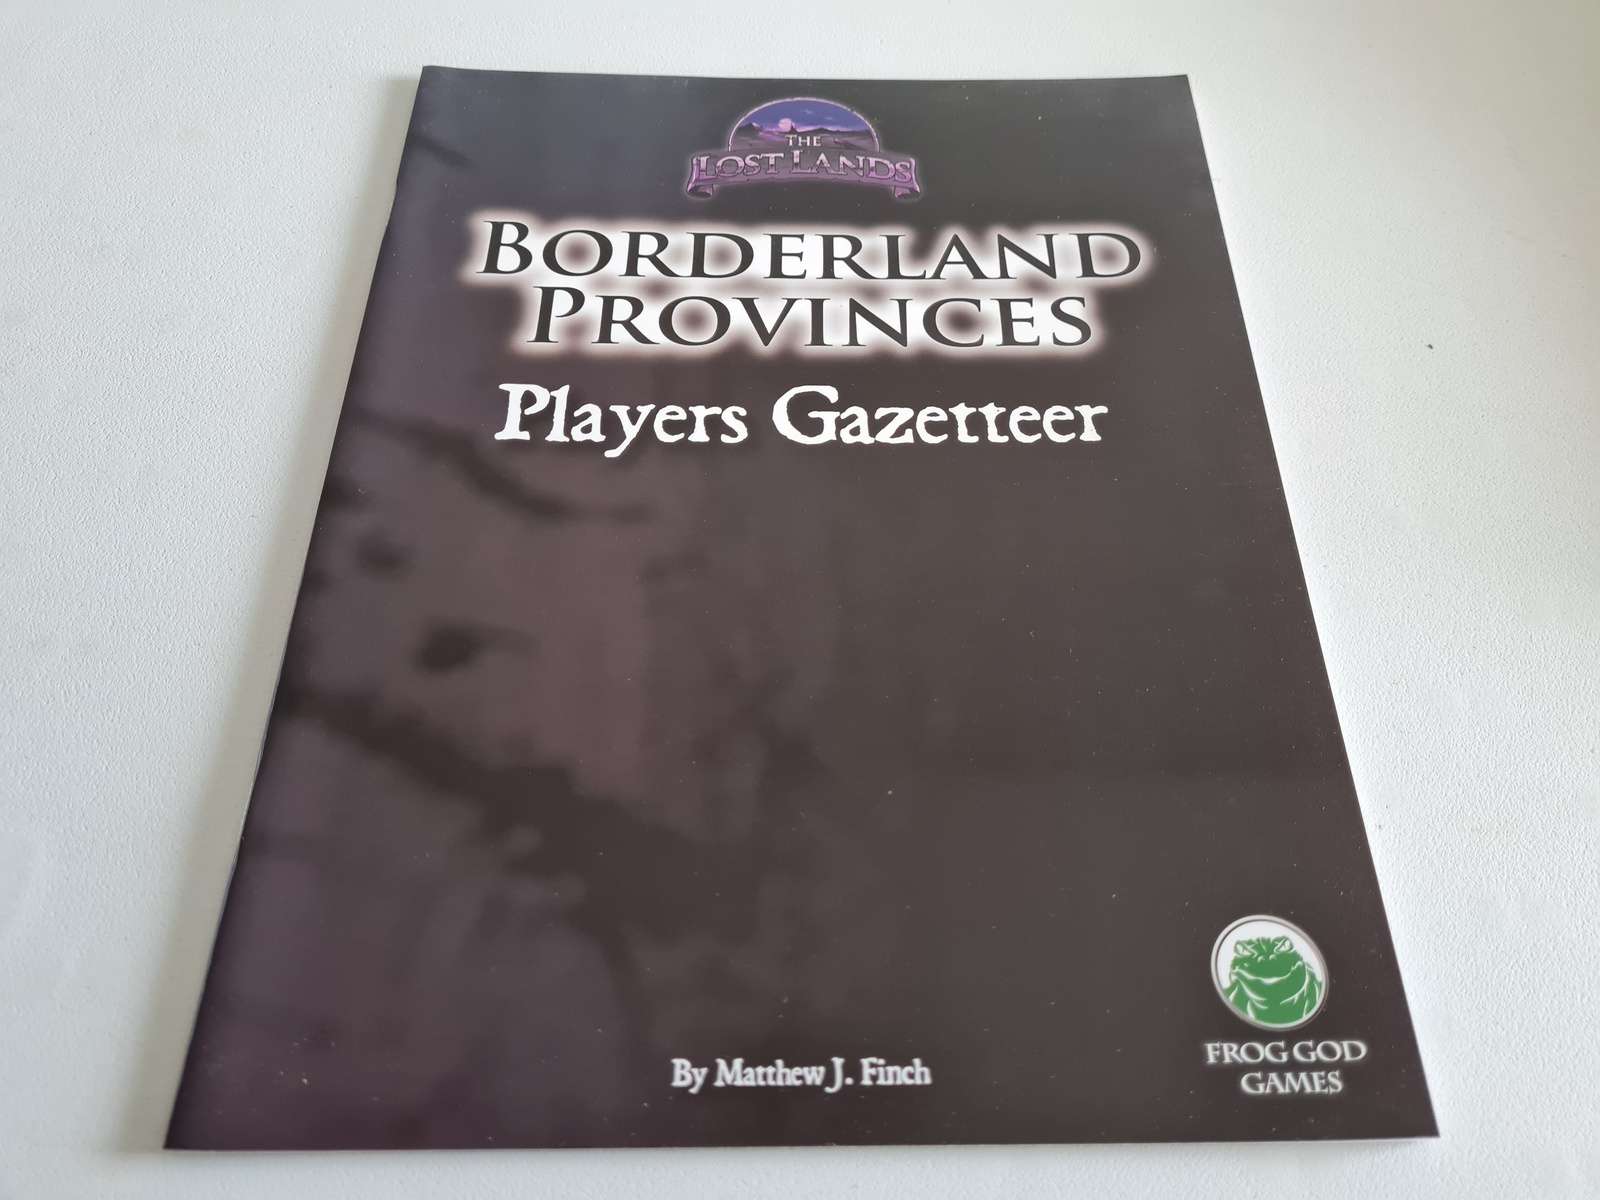 Borderland Provinces Players Gazetteer (The Lost Lands)